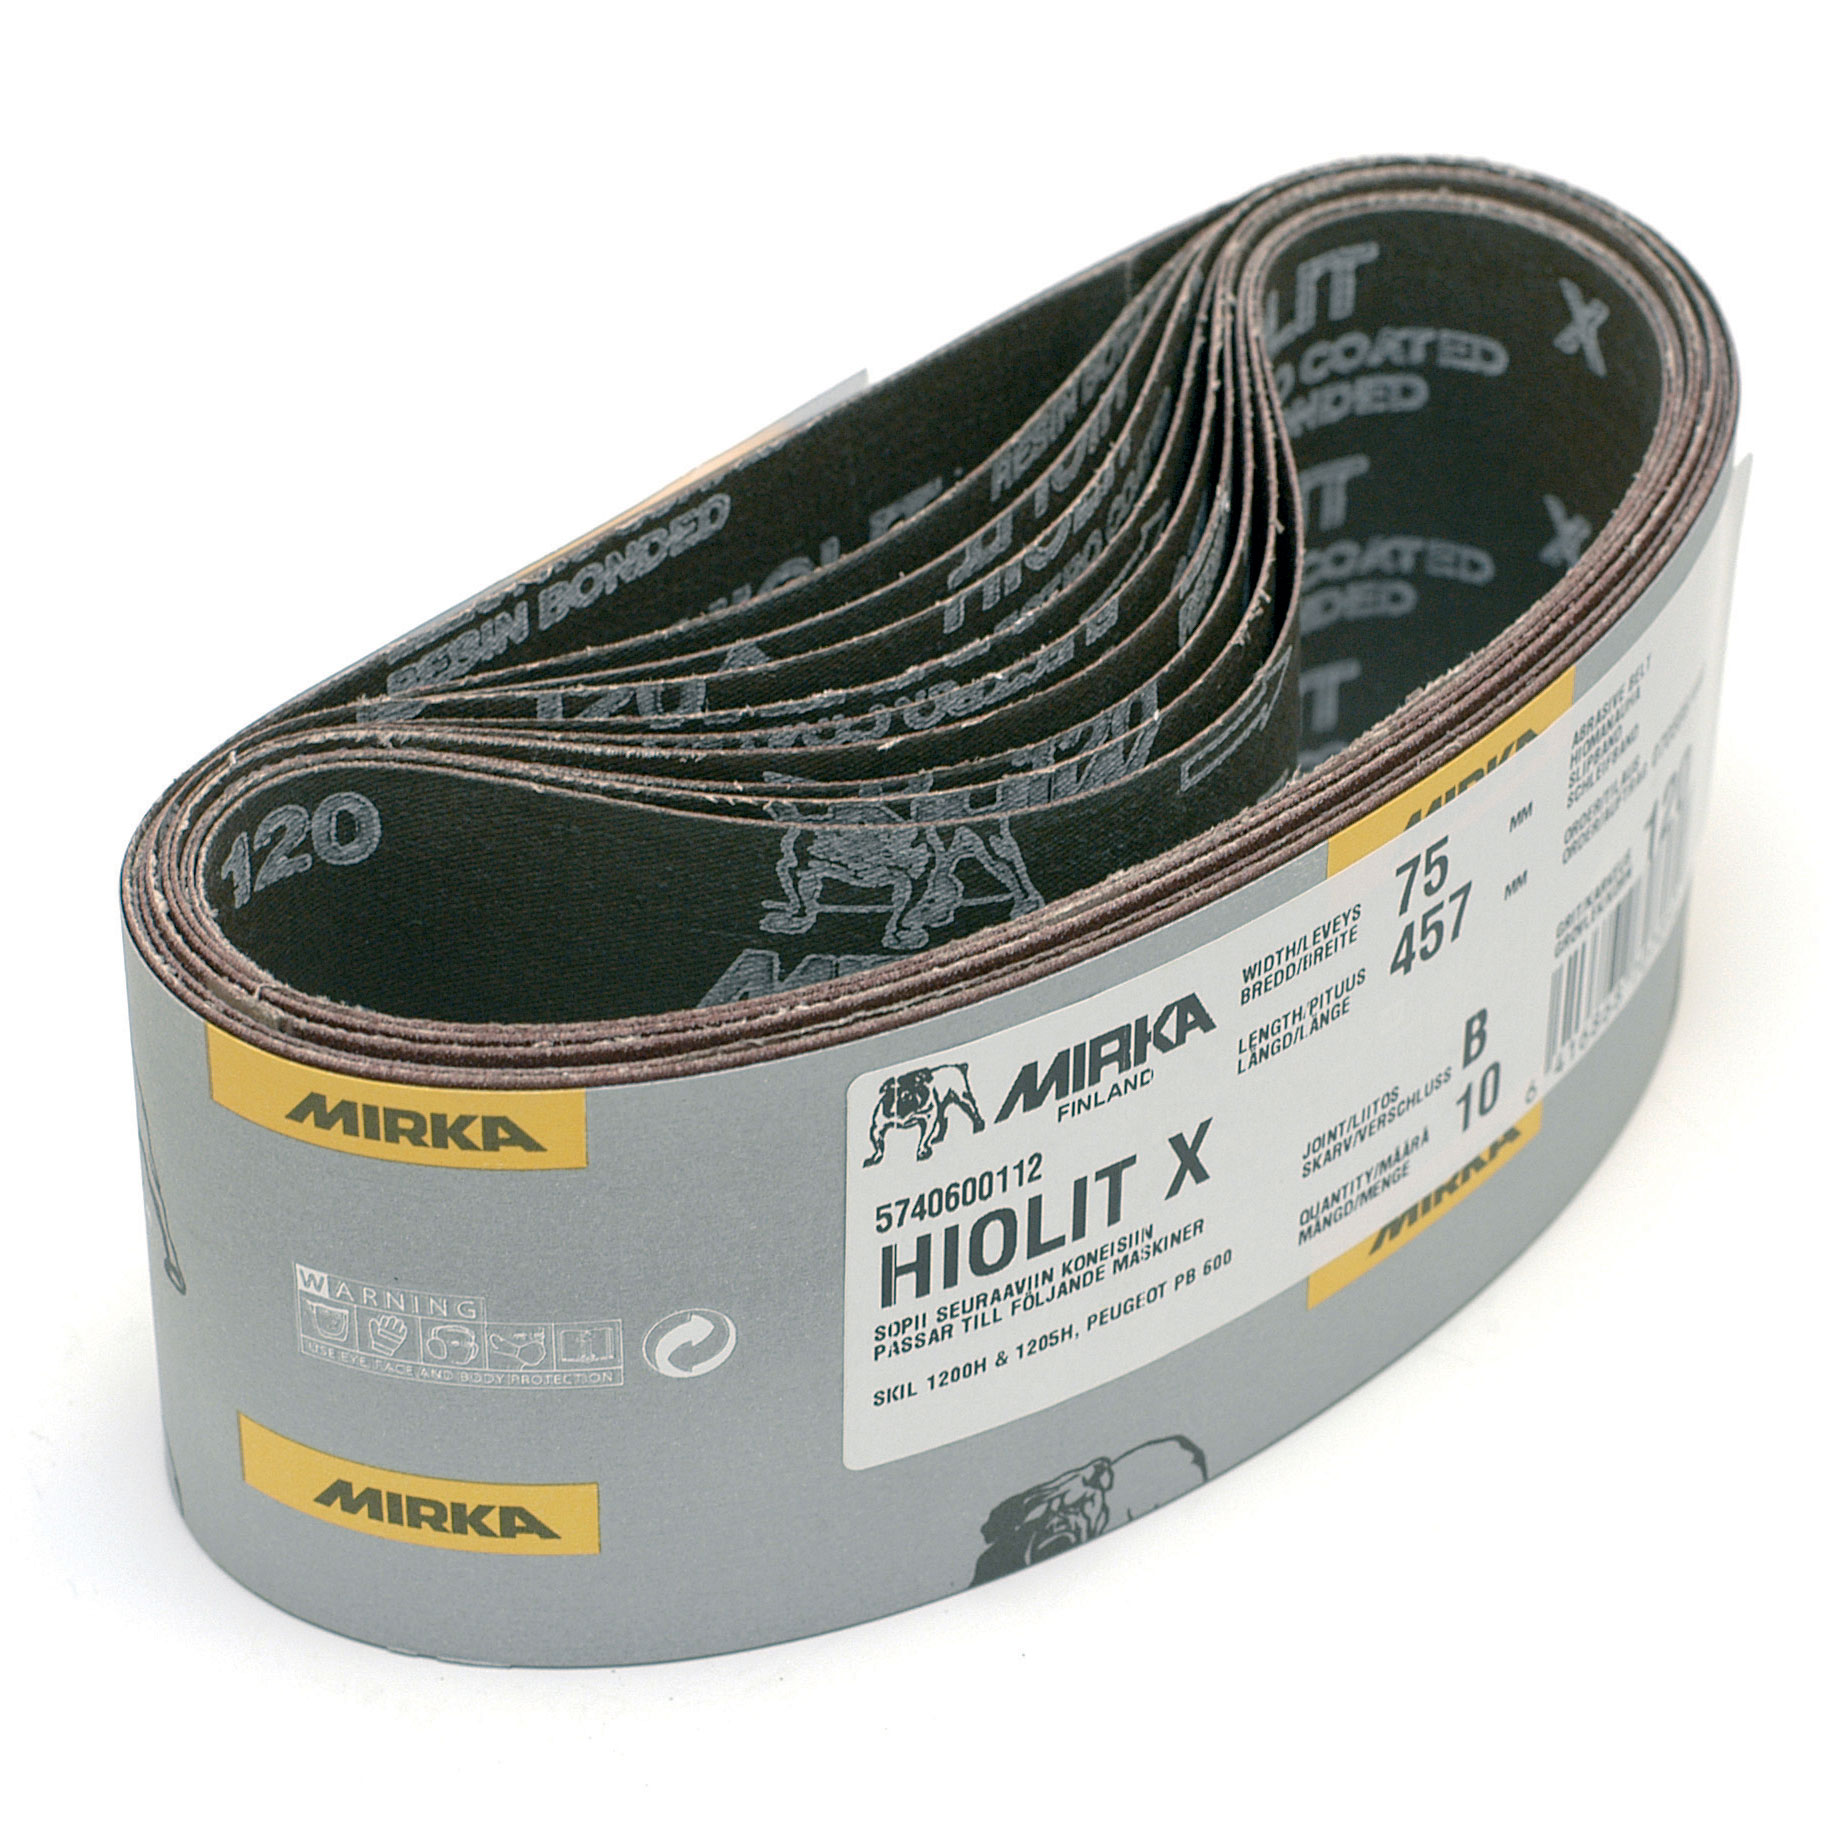 Hiolit Xo Portable Abrasive Belt (tape Joint), 150 Grit, 10 Belts/box